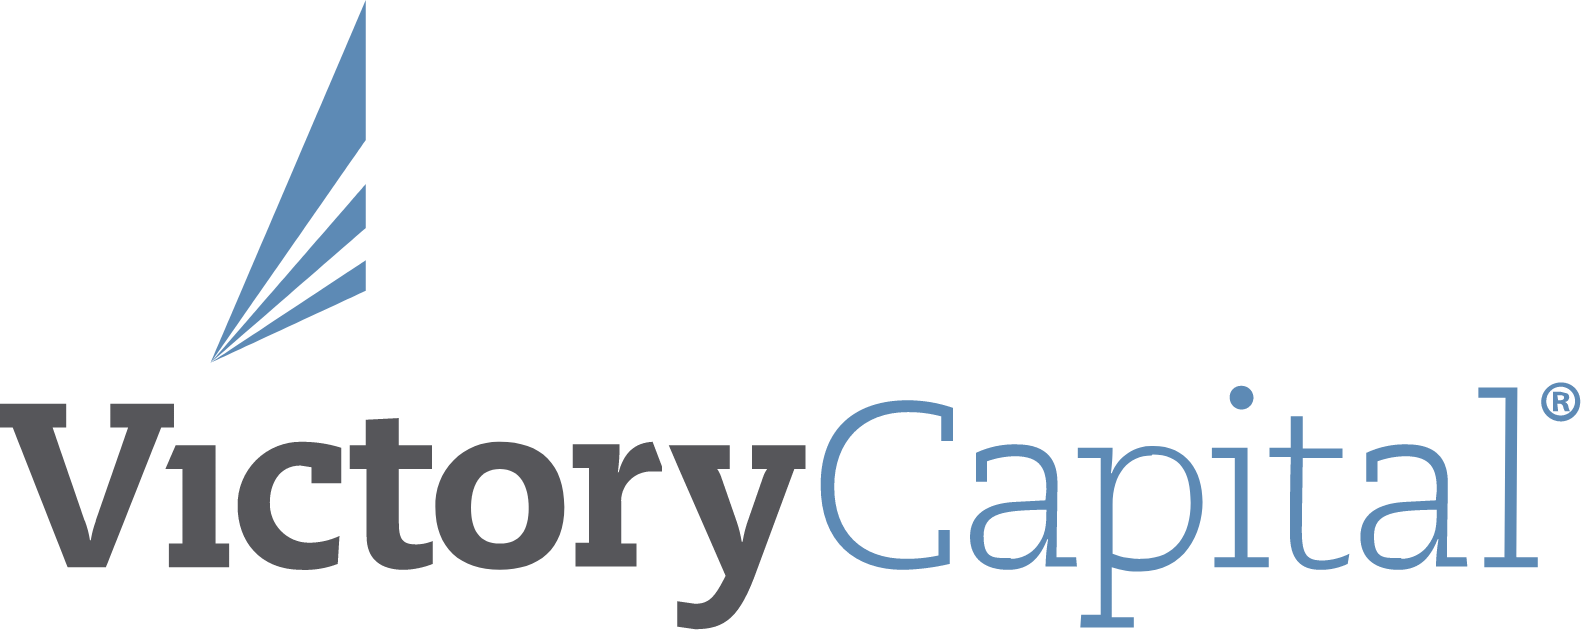 Victory Capital logo large (transparent PNG)